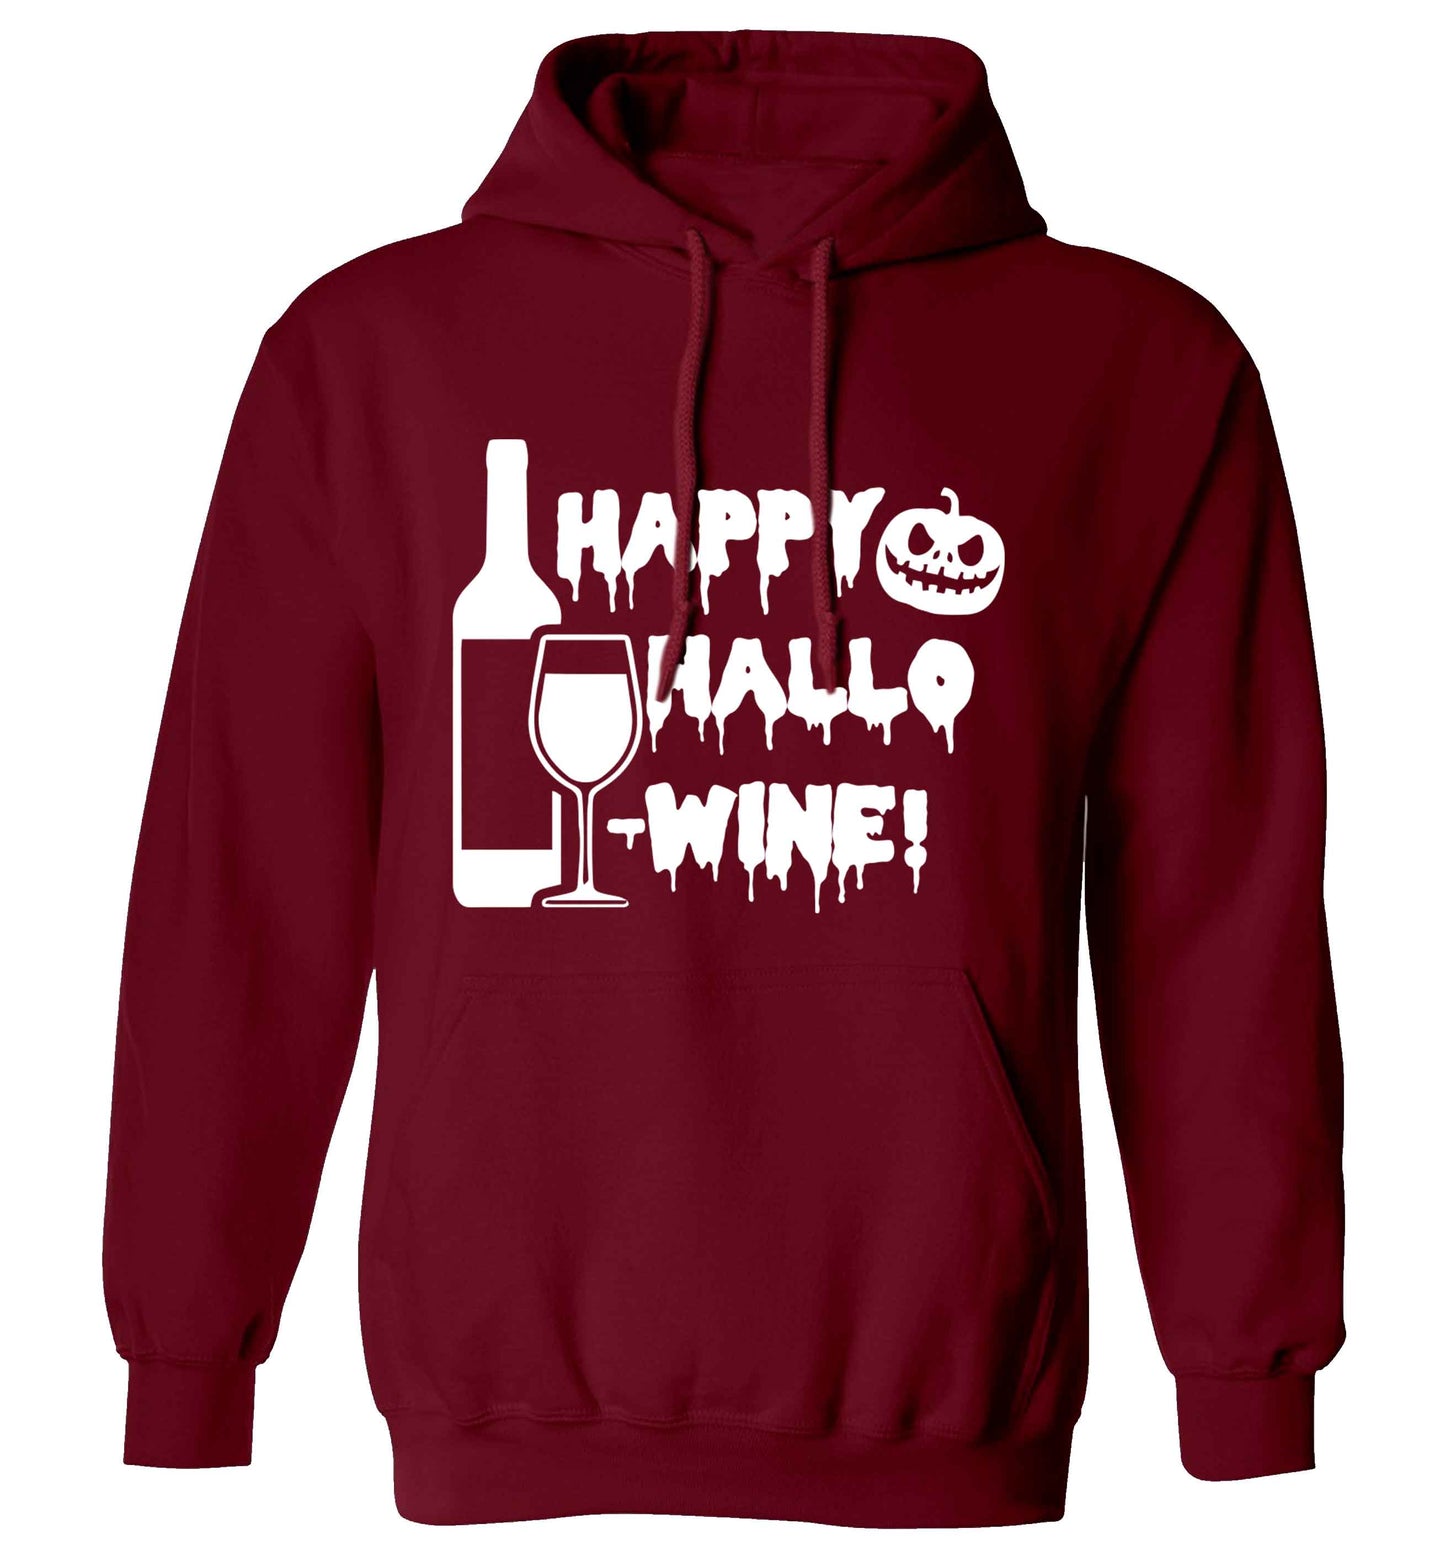 Happy hallow-wine adults unisex maroon hoodie 2XL